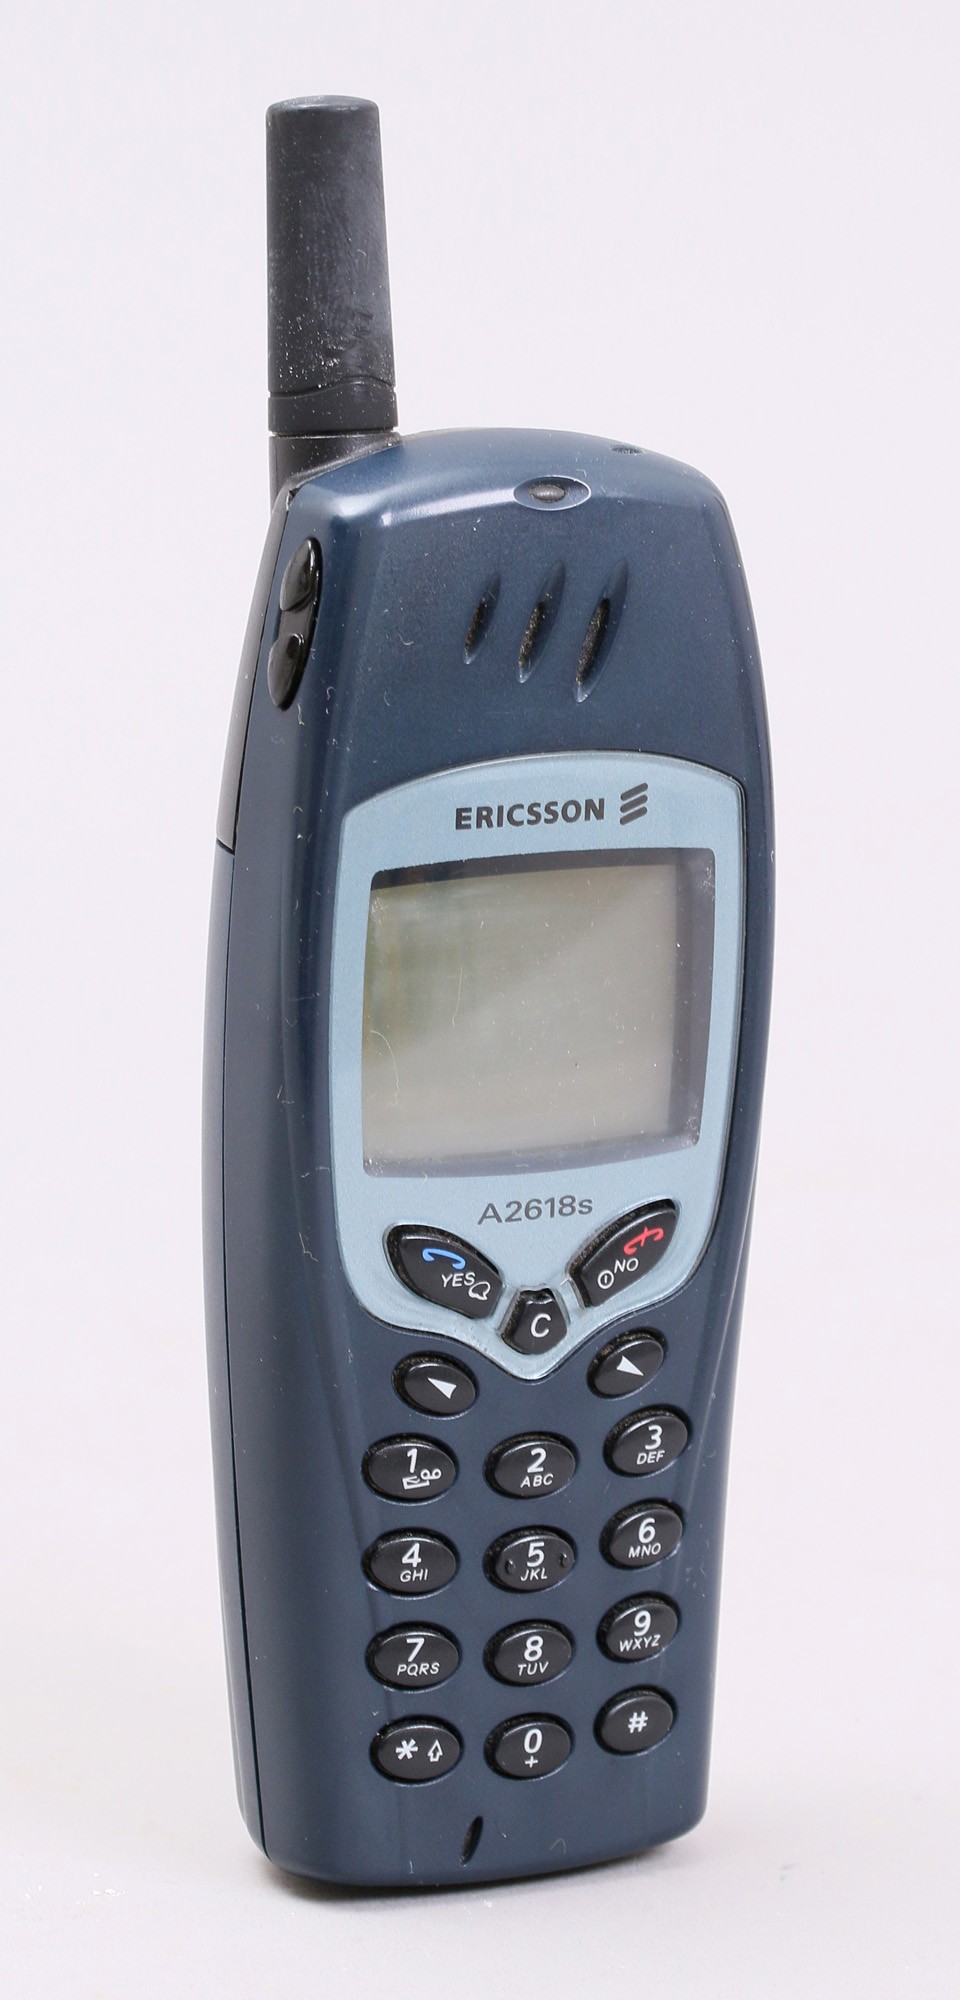 Ericsson A2618s mobiltelefon (Postamúzeum CC BY-NC-SA)